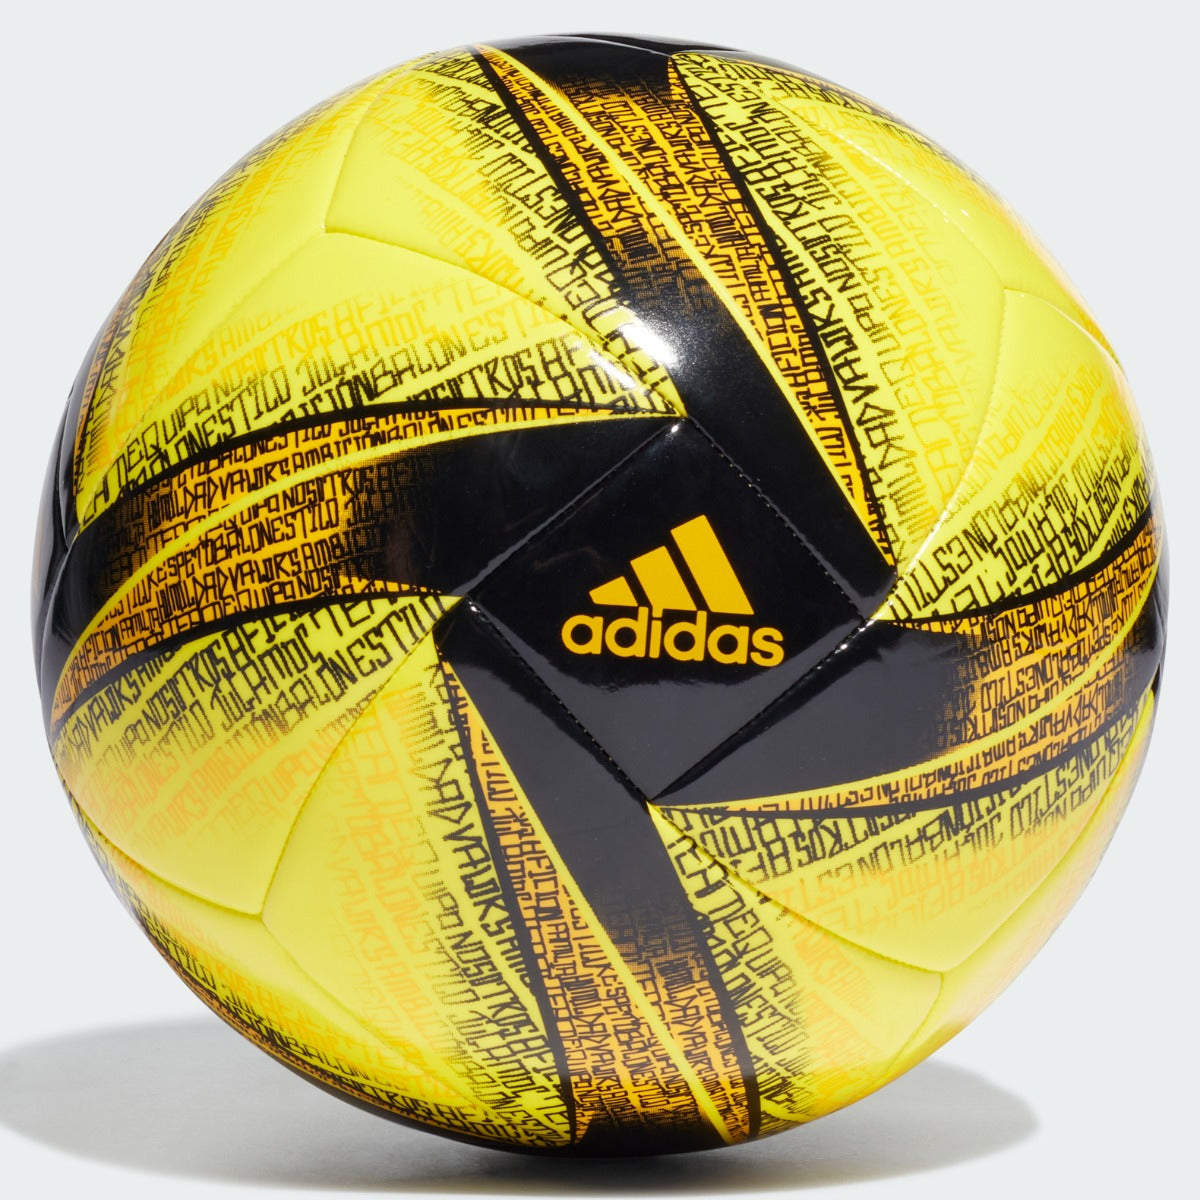 Adidas Messi Club Ball - Yellow-Black (Back)